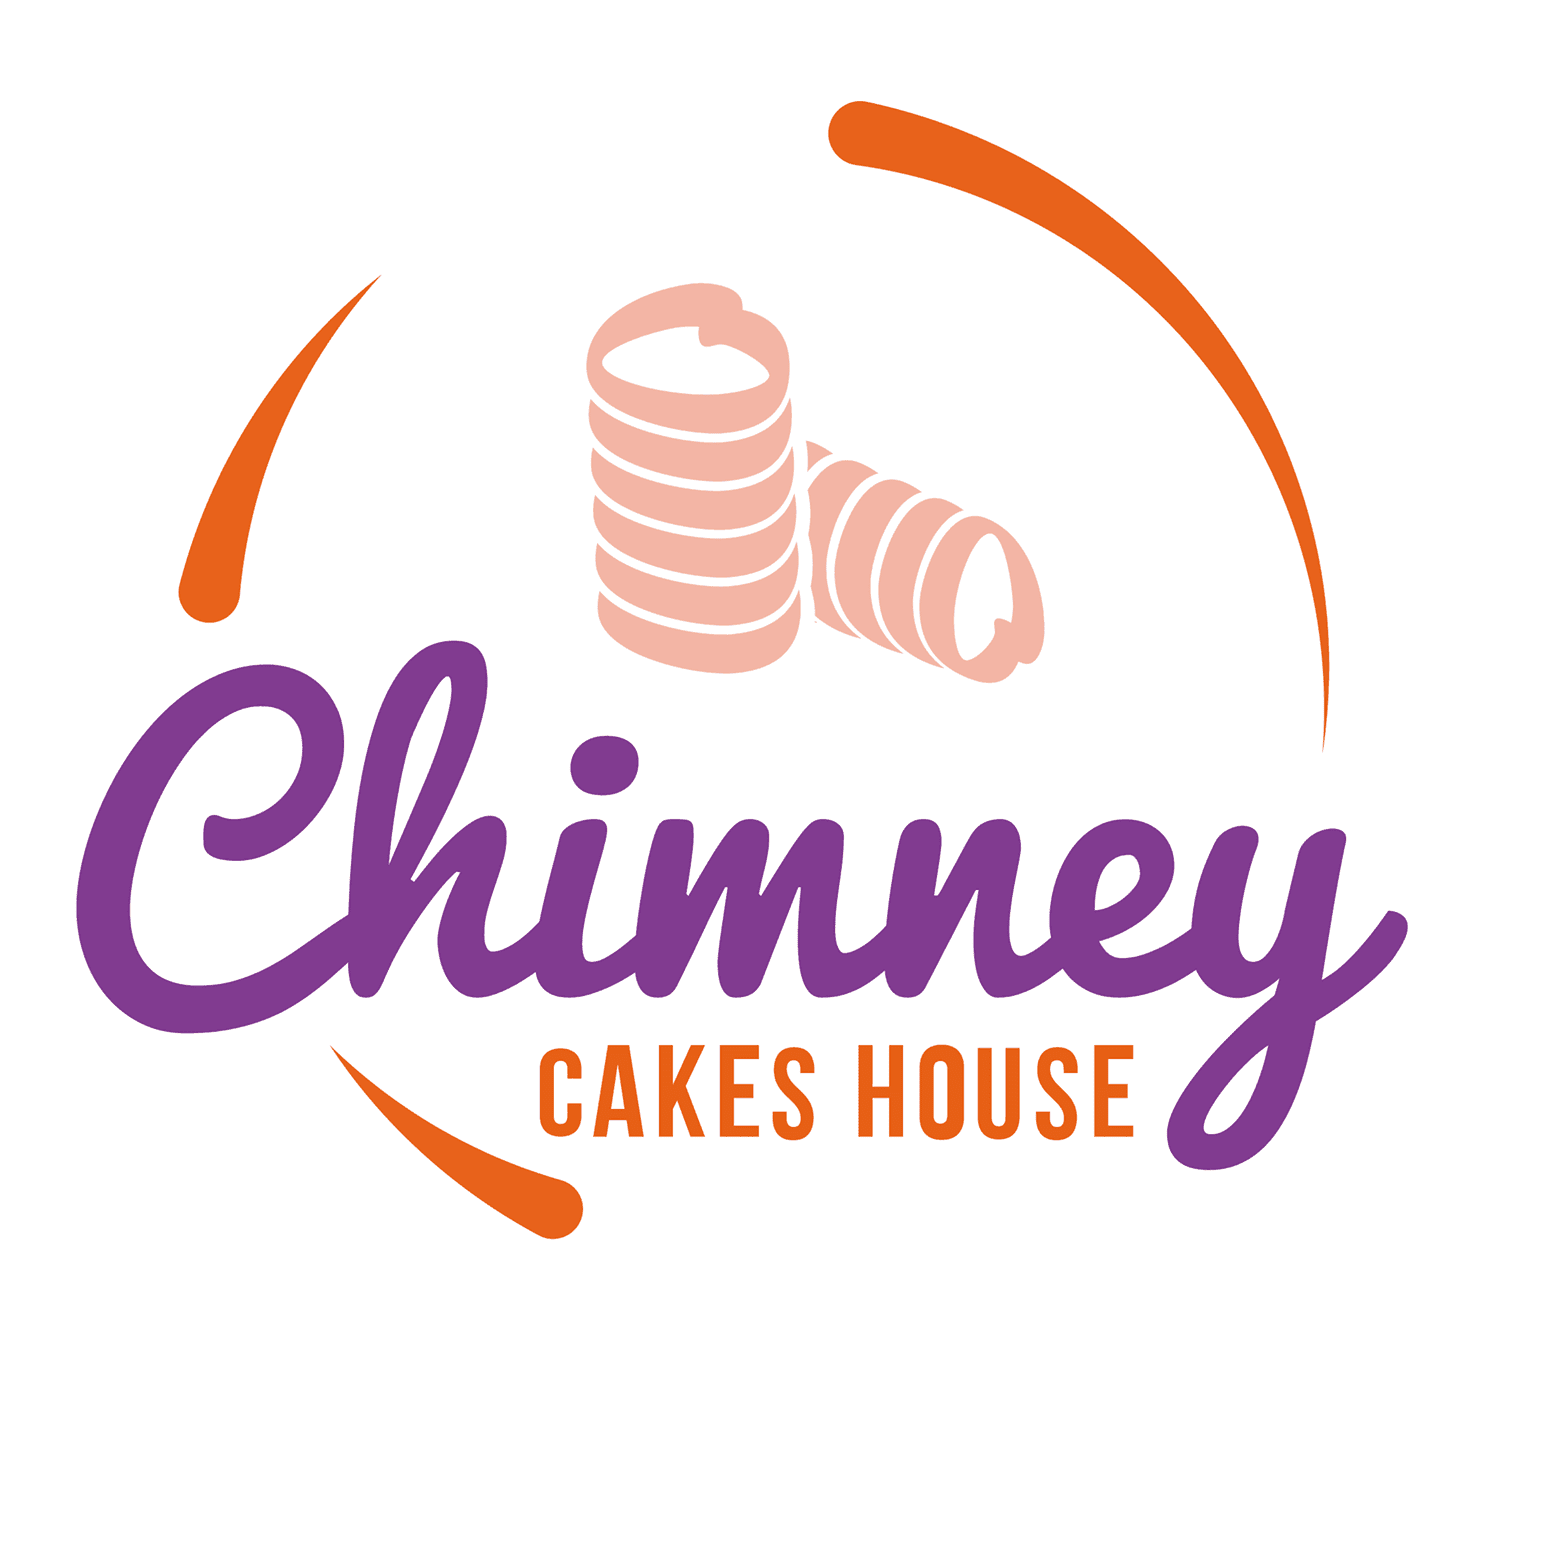 Chimney Cakes House